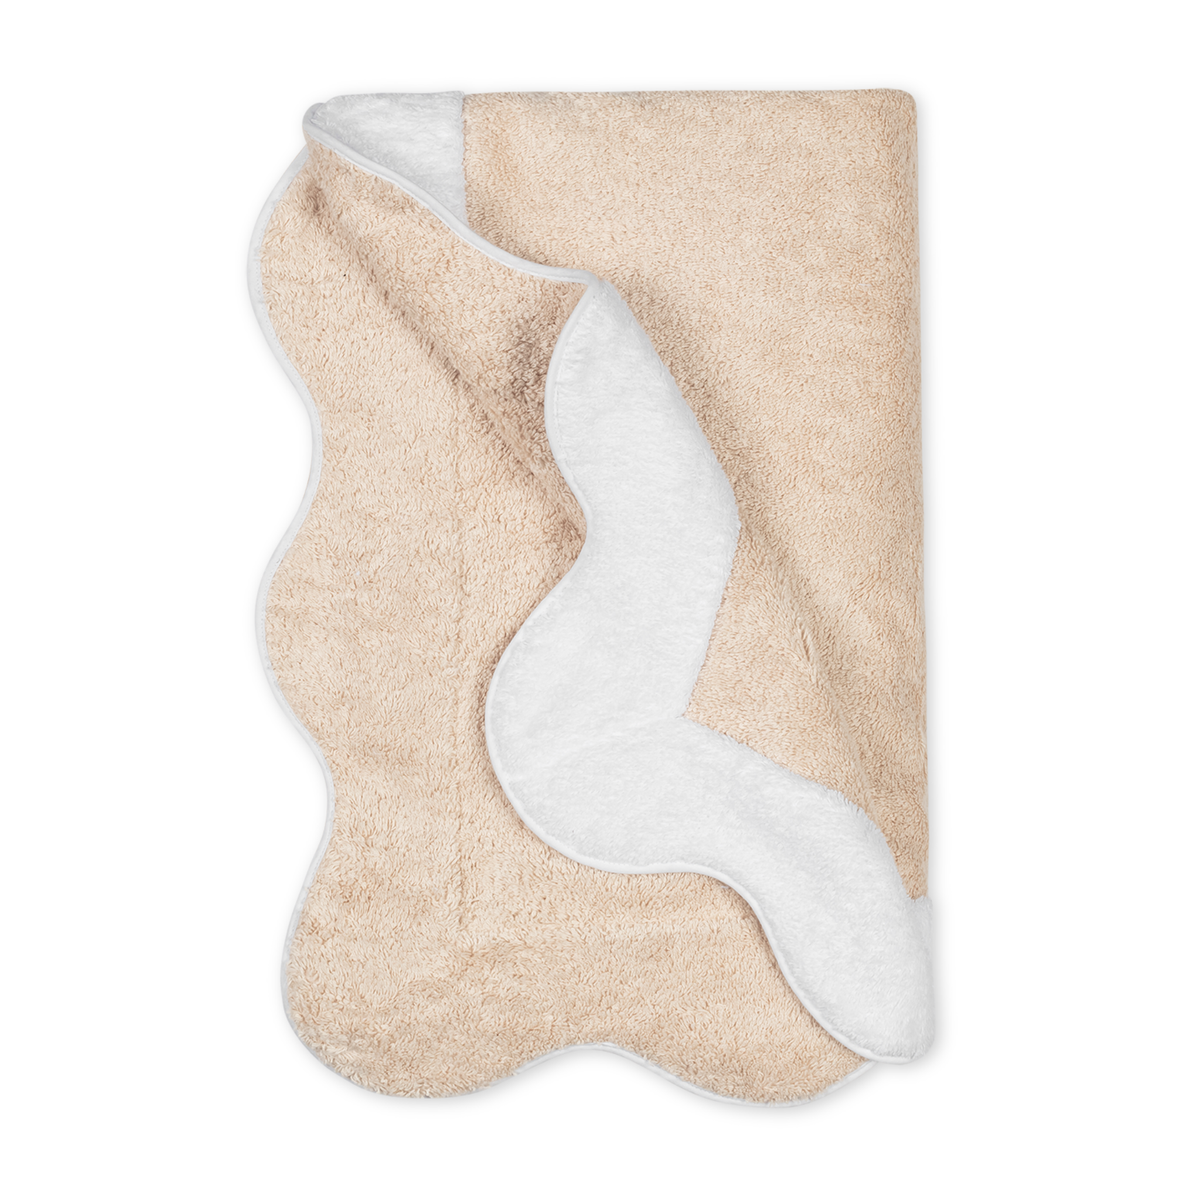 Folded Matouk Neptune Beach Towels in Sand/White Color